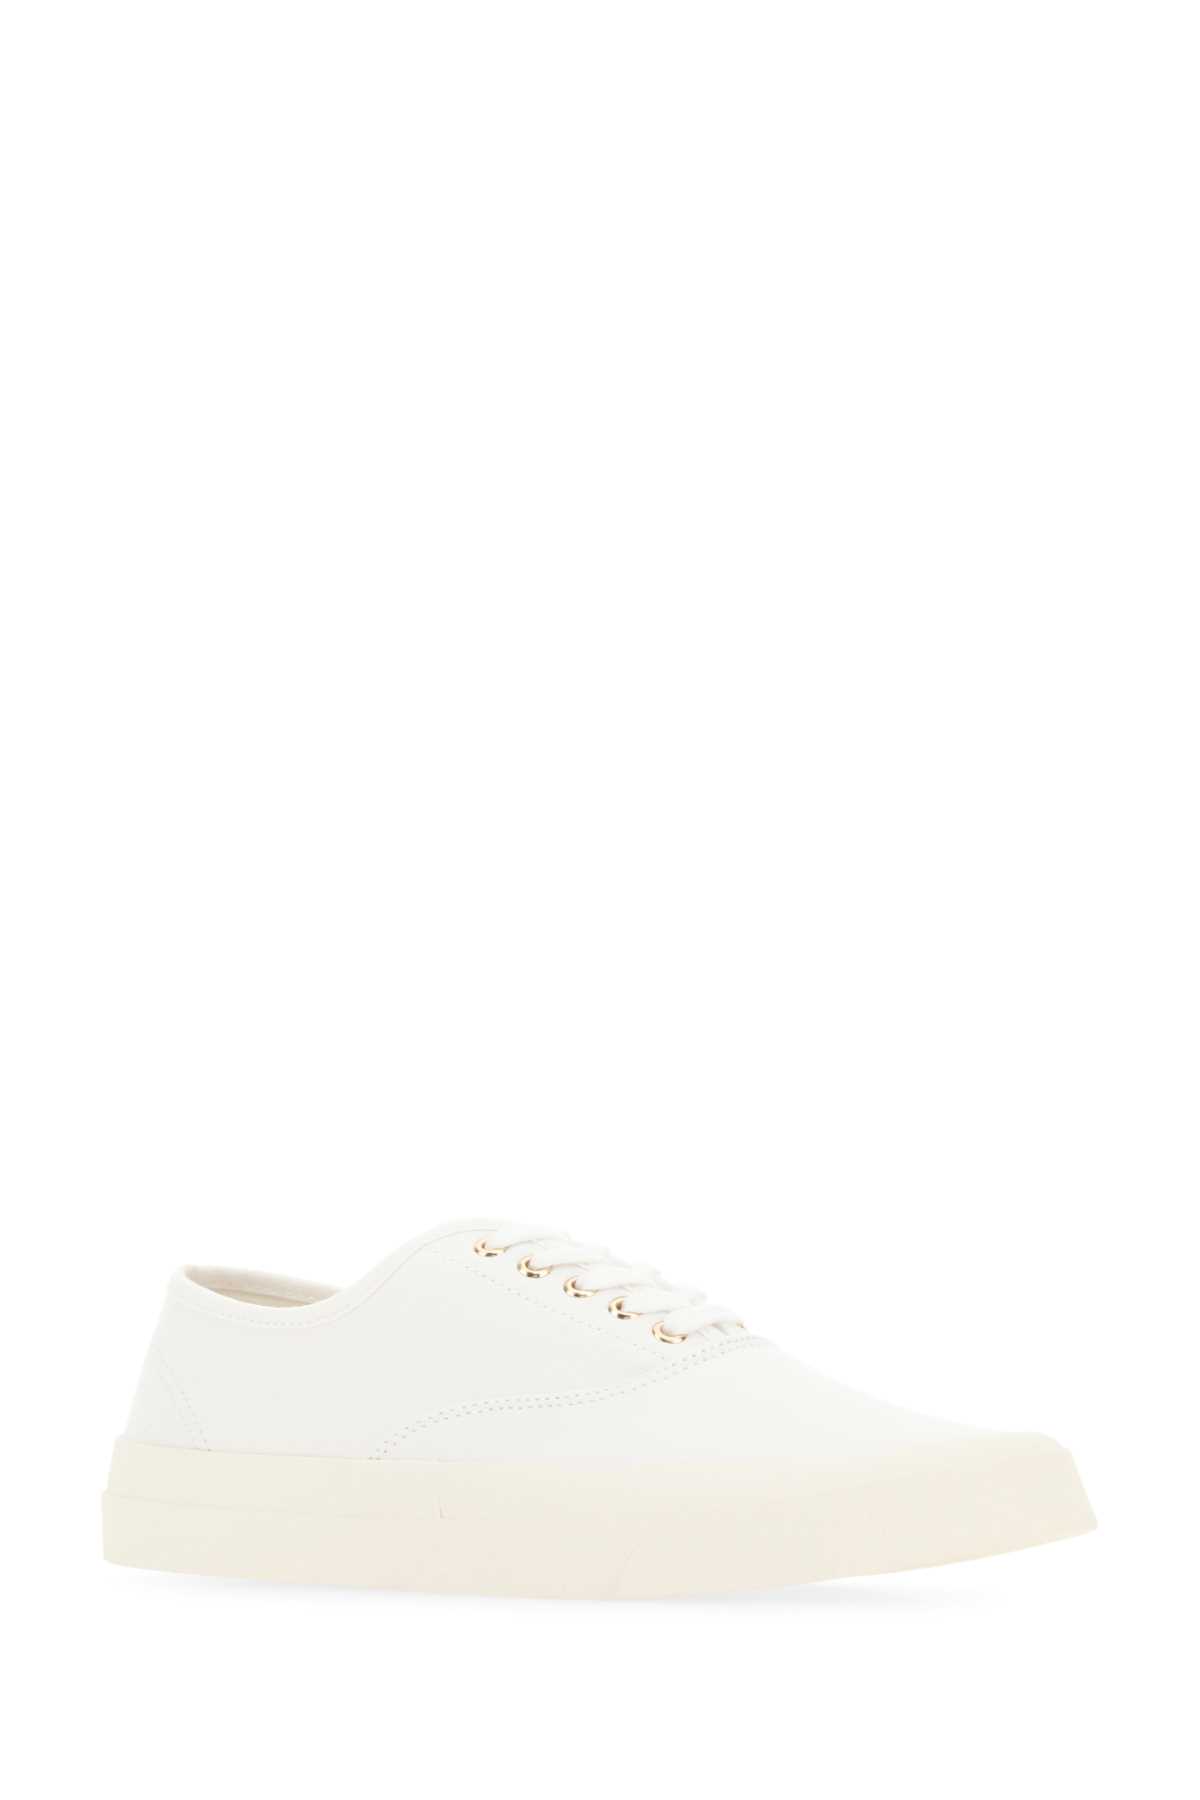 Maison Kitsuné White Canvas Sneakers In P101